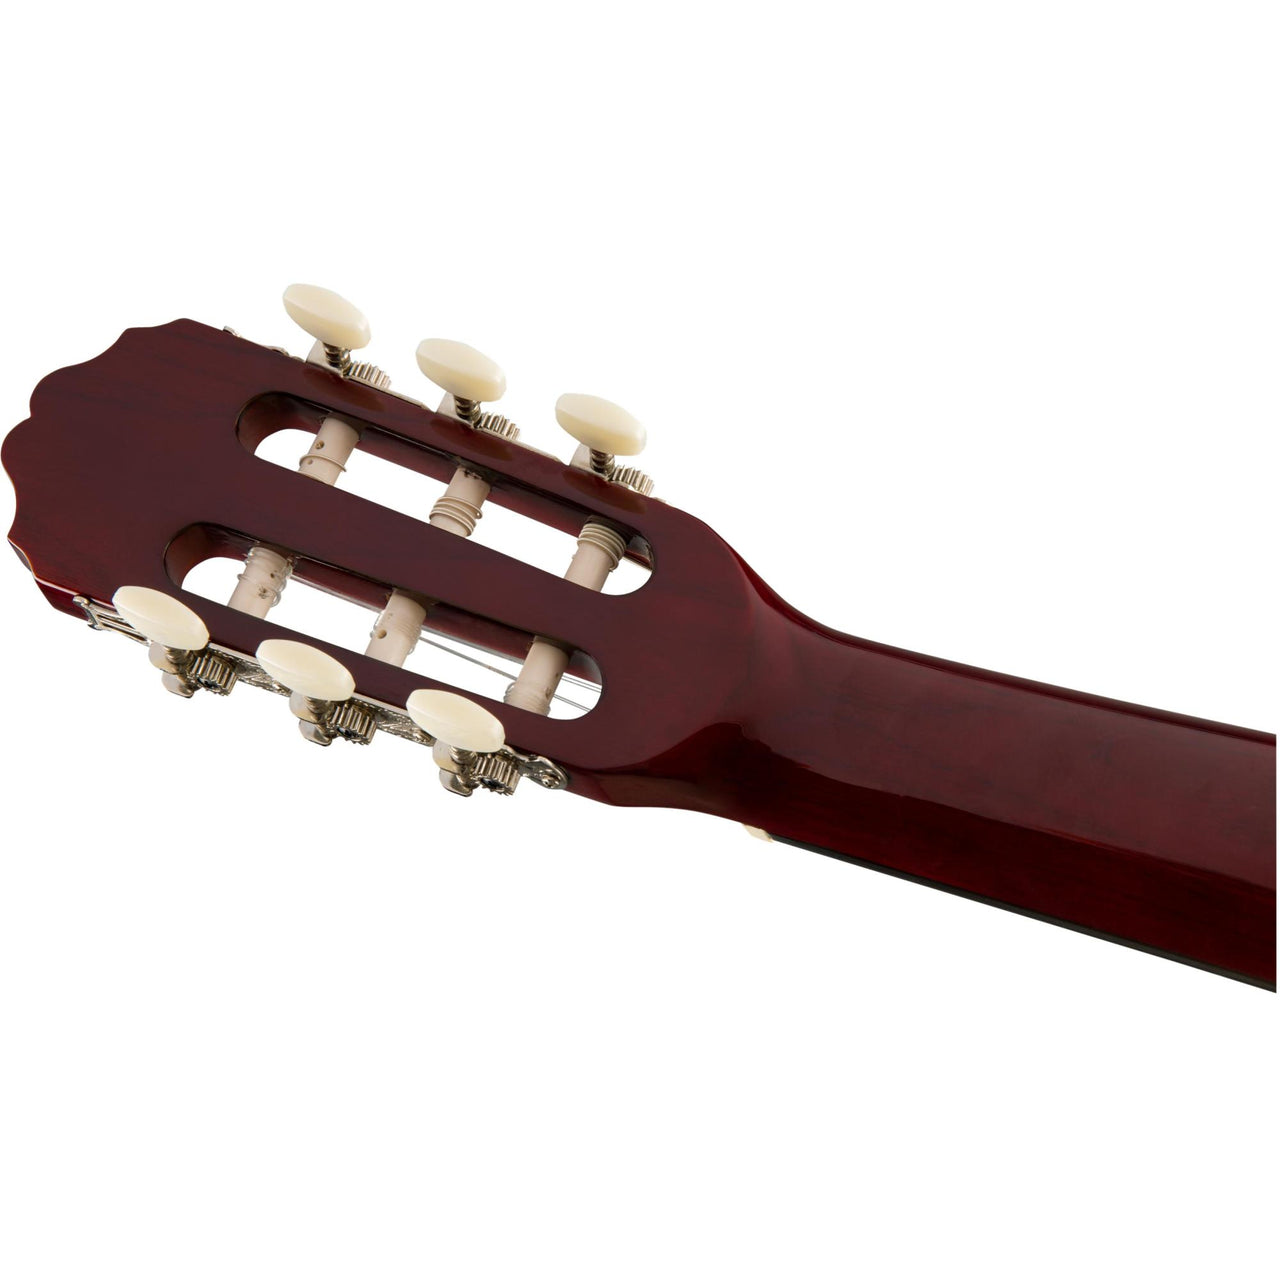 Guitarra Clasica Fender Sa-150n Squier Natural 0961091021